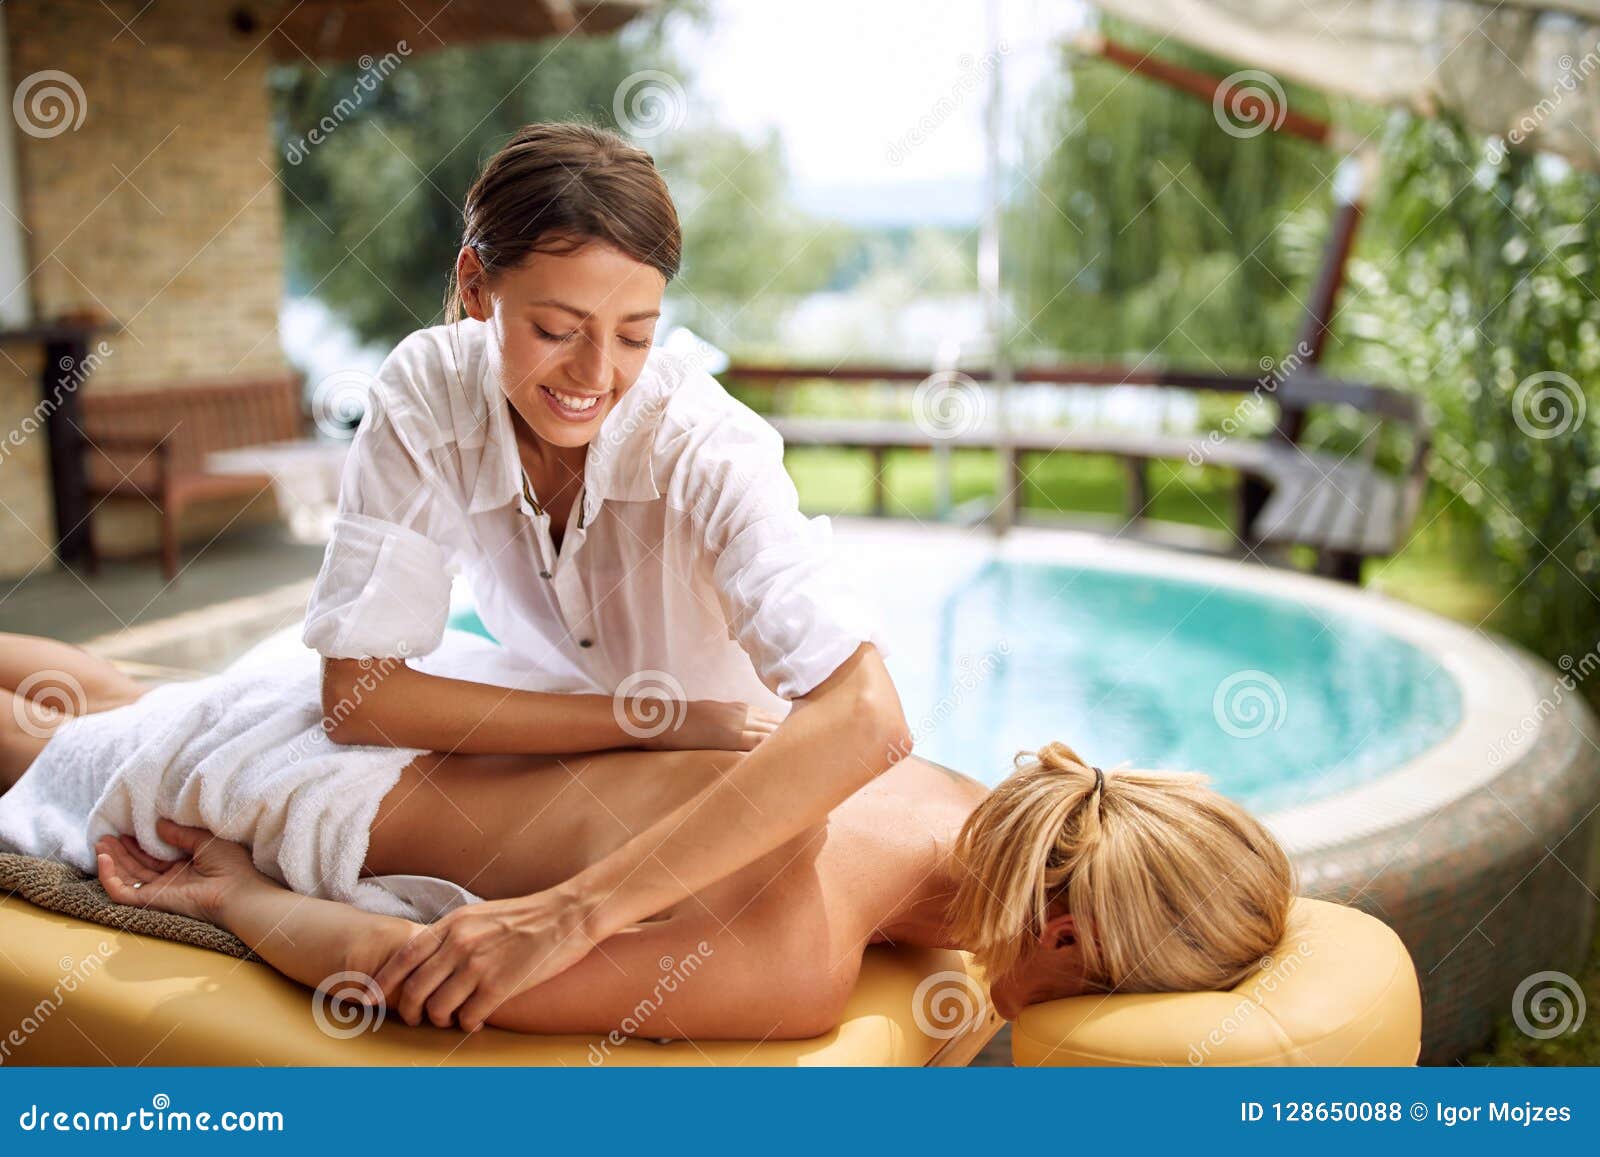 massage therapist doing a back massage on outdoor